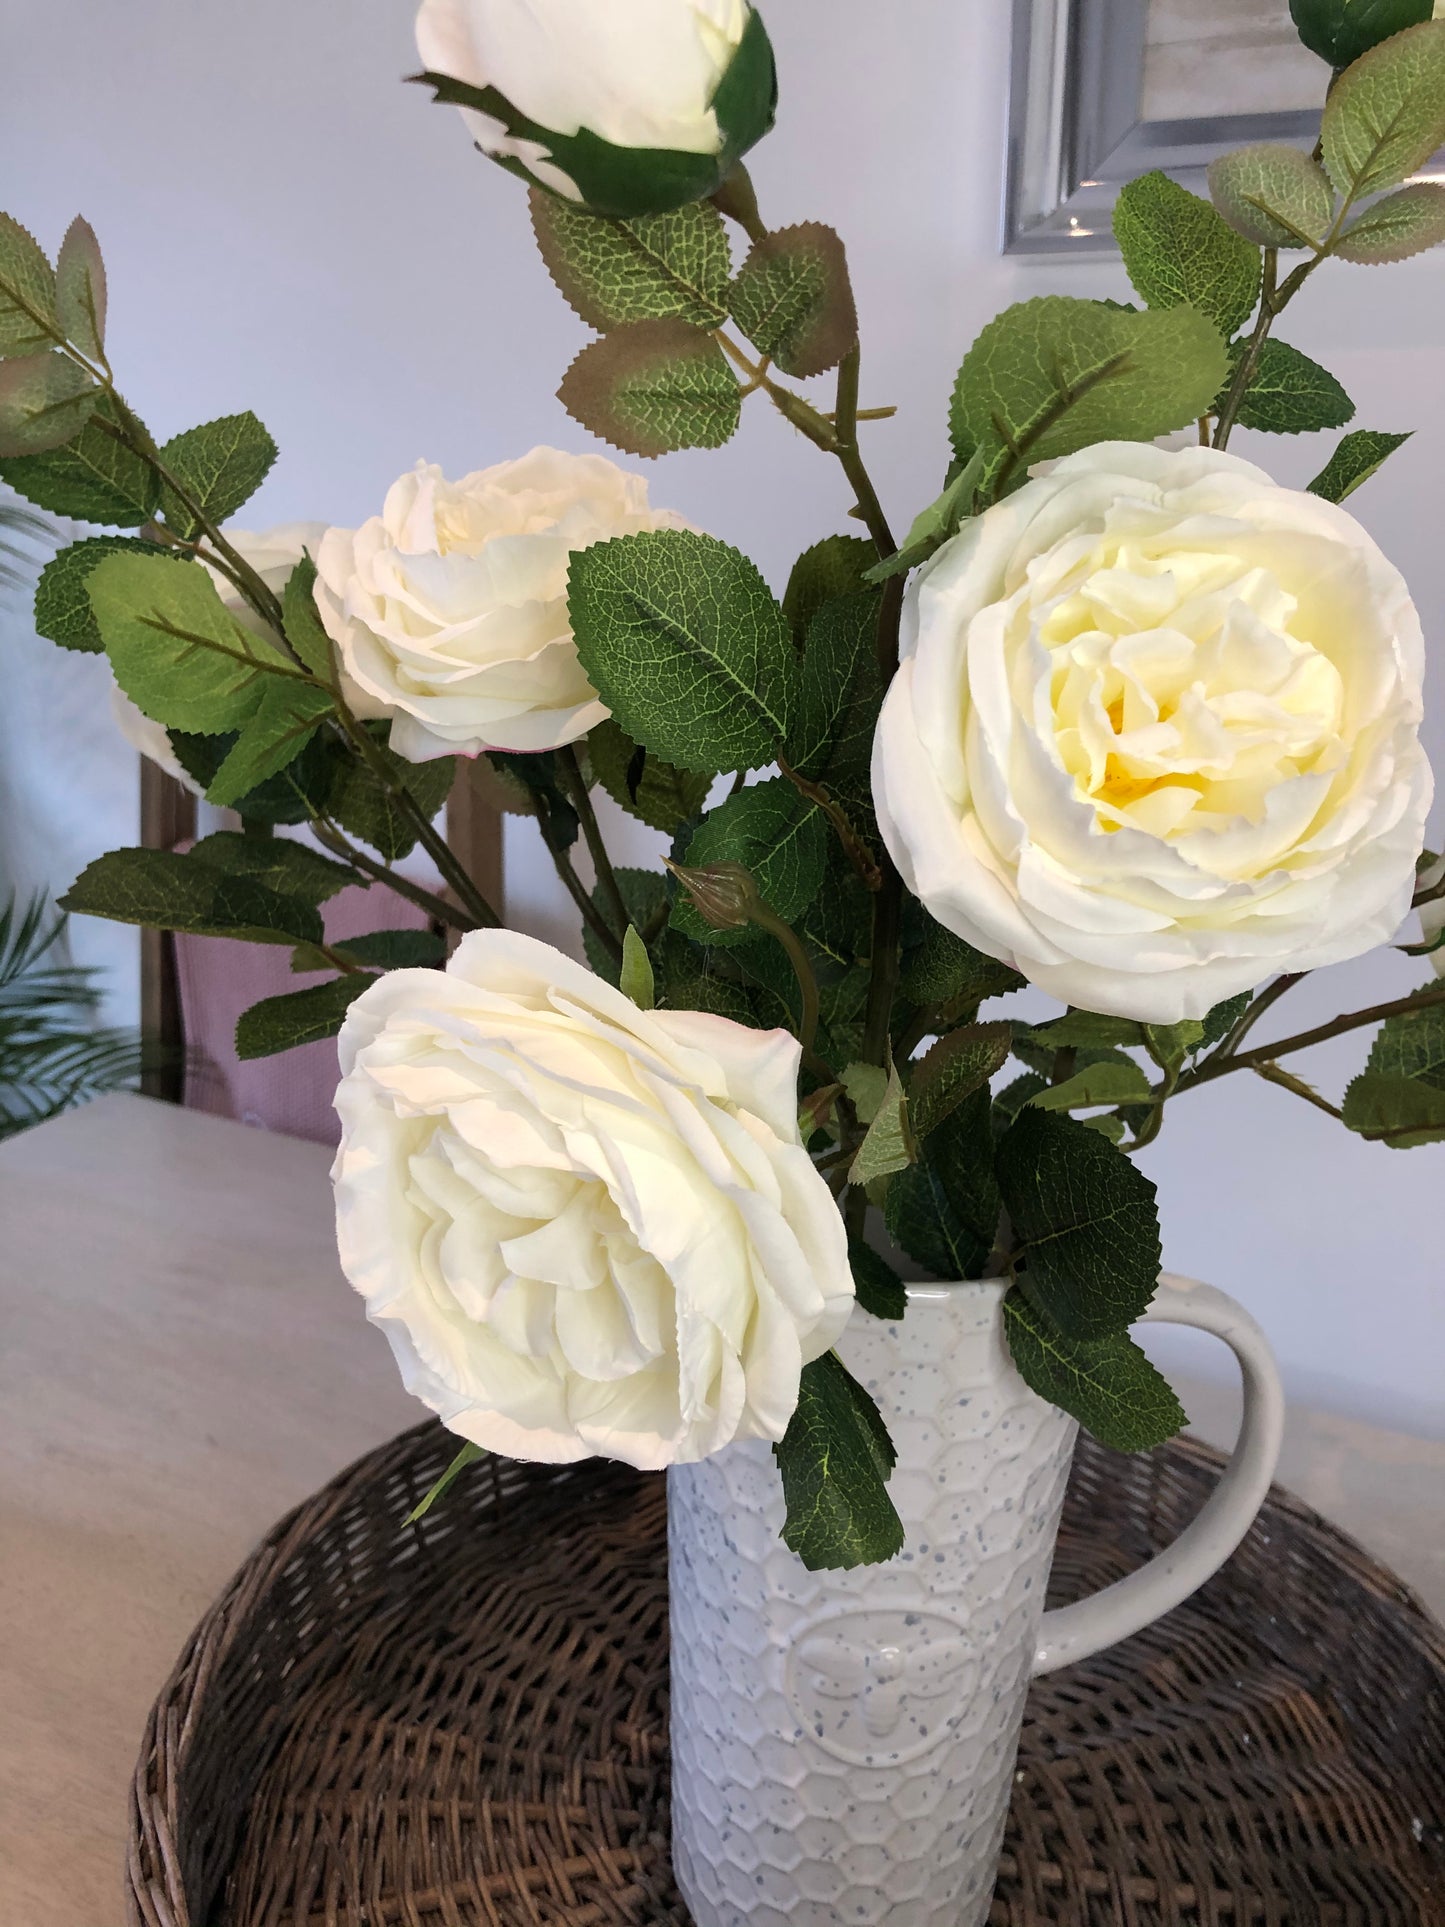 Triple White Rose Stems x 3 stems